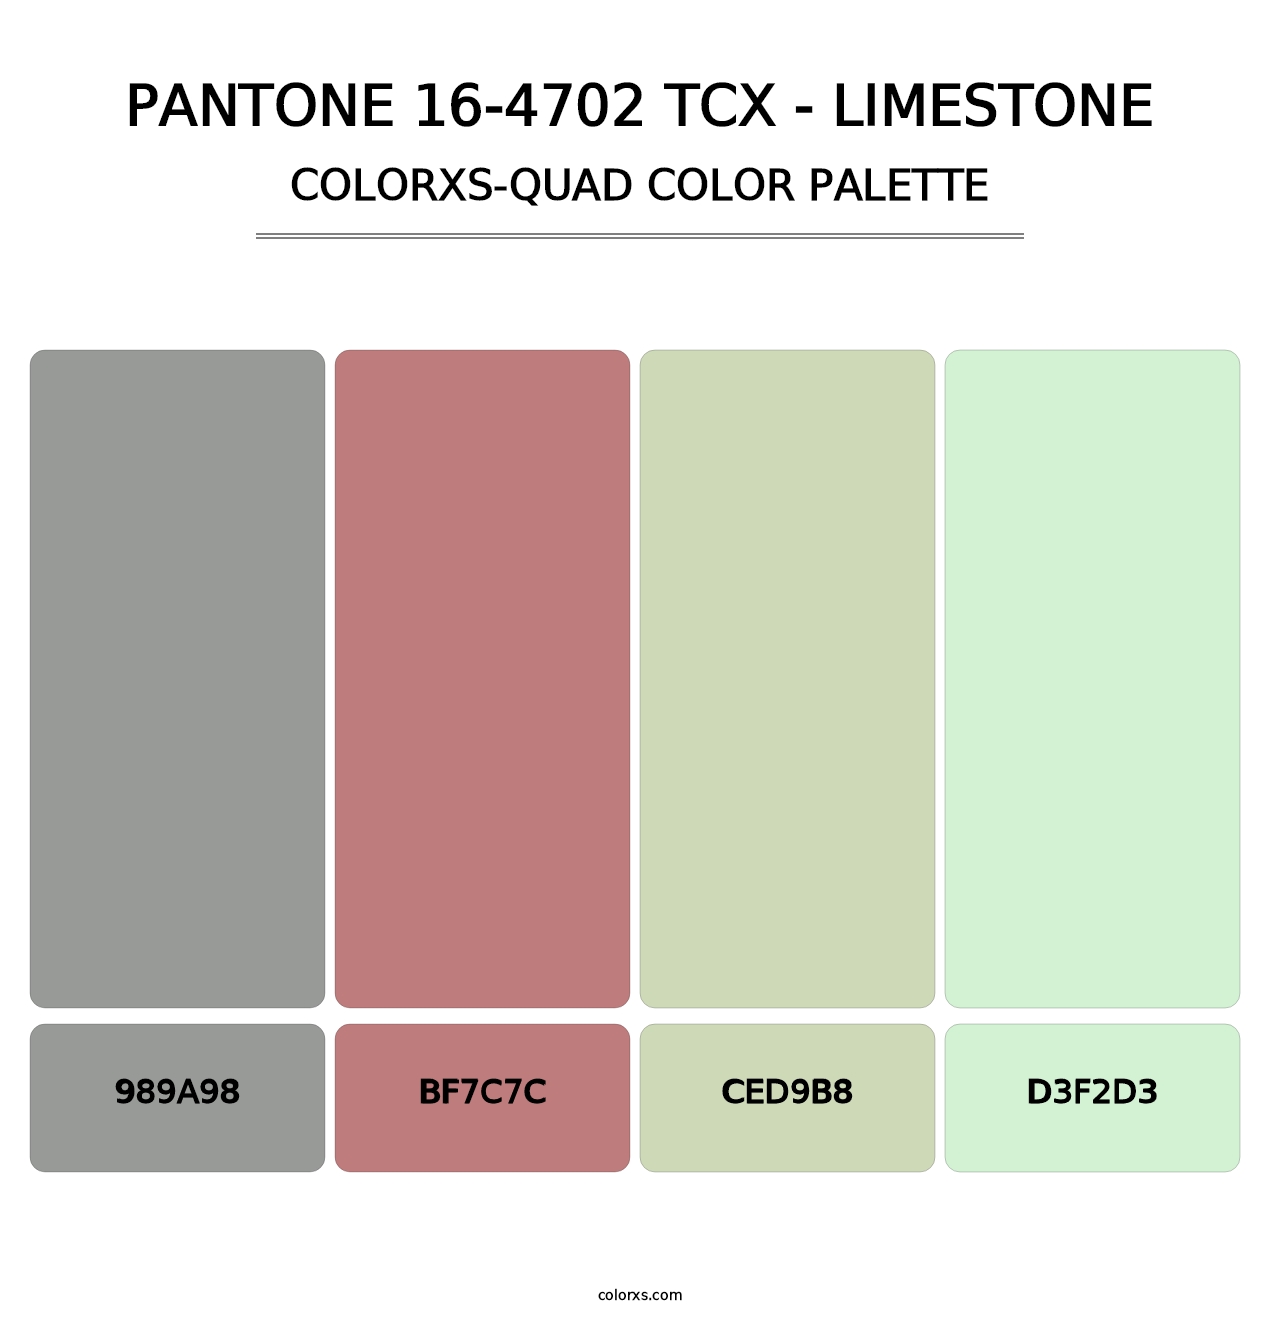 PANTONE 16-4702 TCX - Limestone - Colorxs Quad Palette